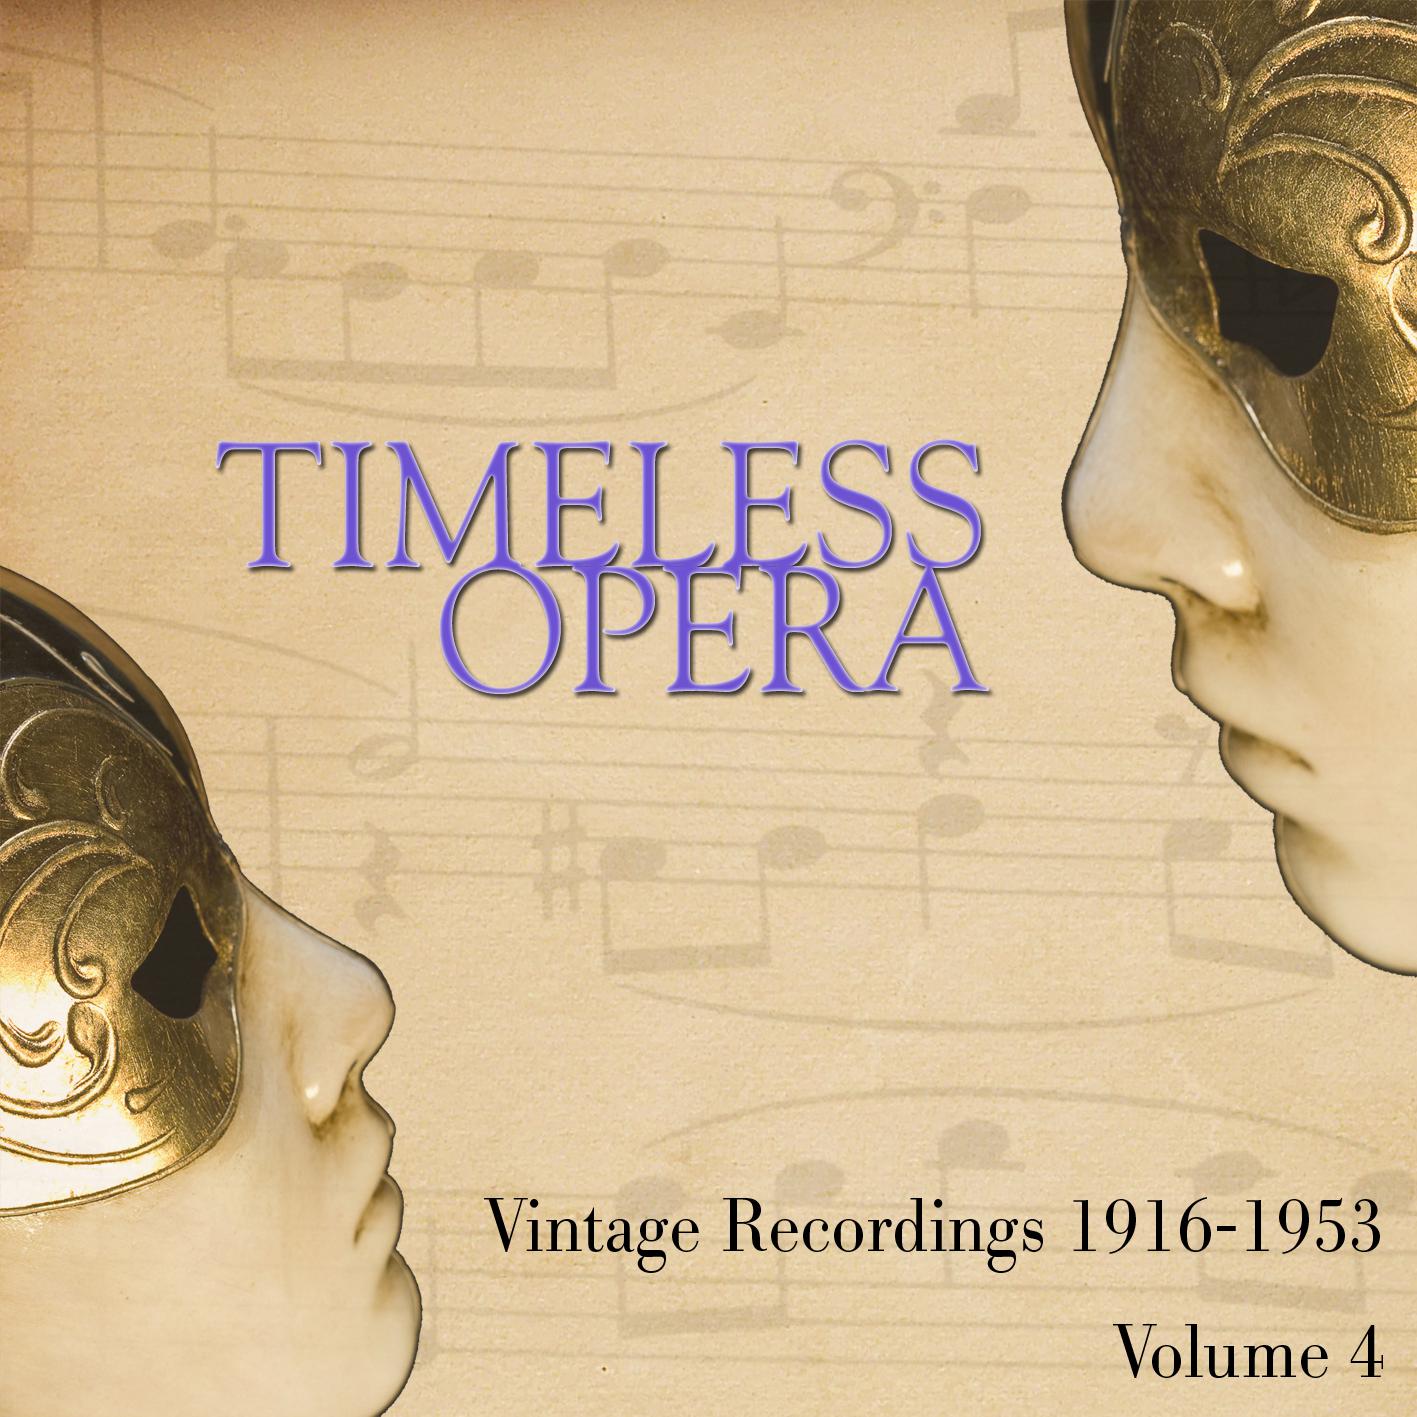 Timeless Opera Vintage Recordings 1916-1953 Vol 4